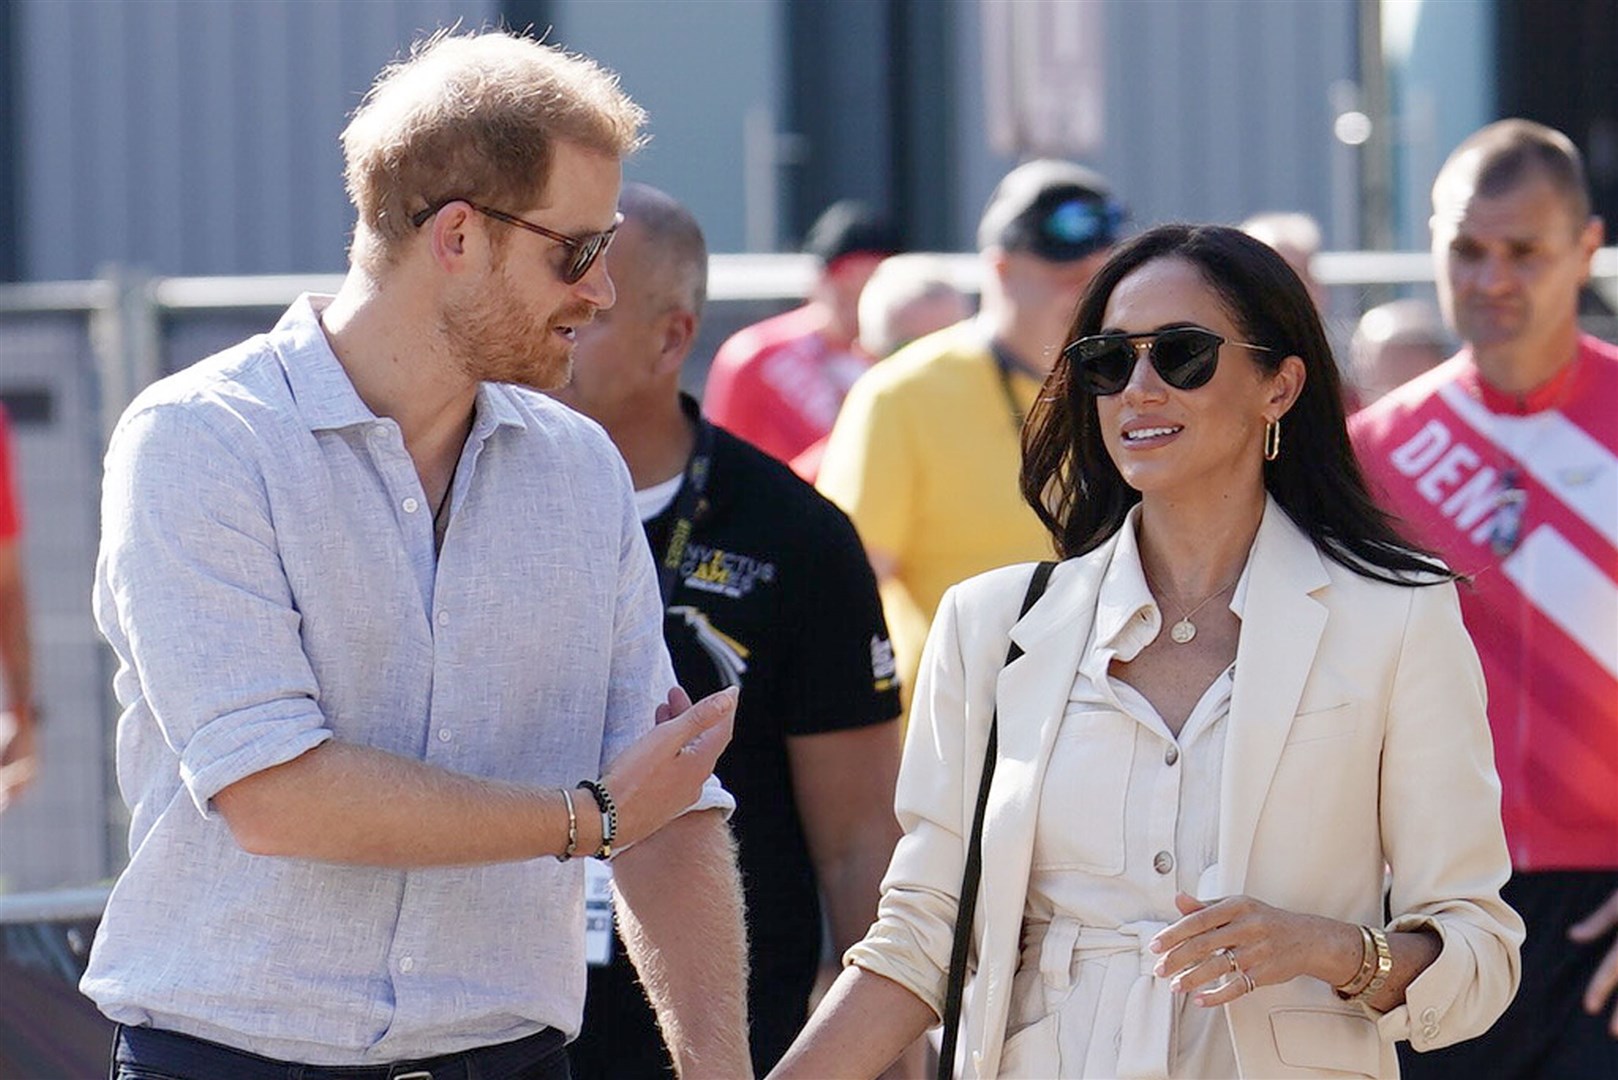 The Duke and Duchess of Sussex met fans outside an Invictus Games venue (Jordan Pettitt/PA)